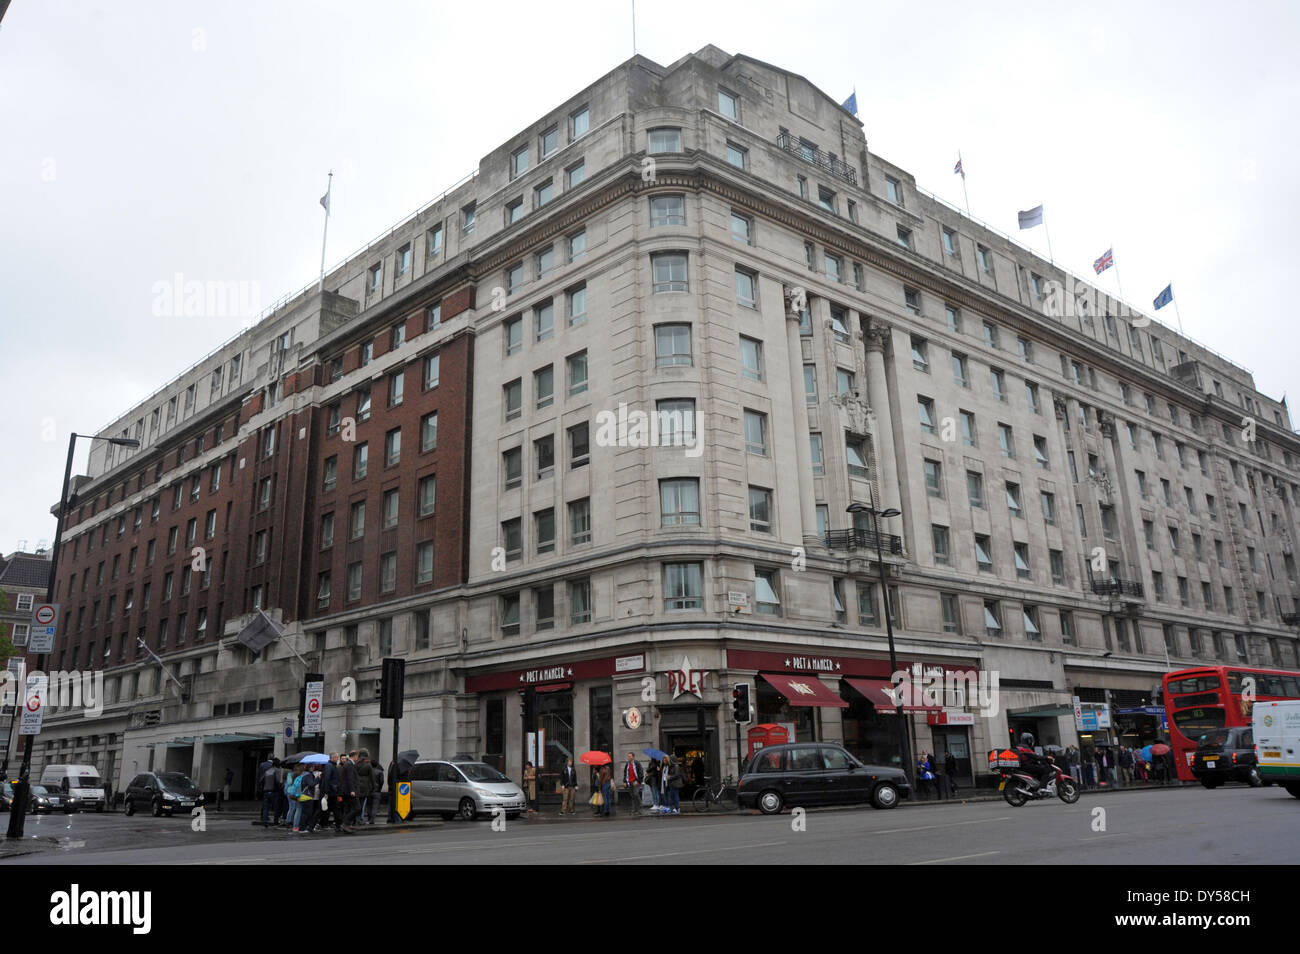 London, UK. 7th April 2014. Cumberland Hotel Oxford Street opposite ...